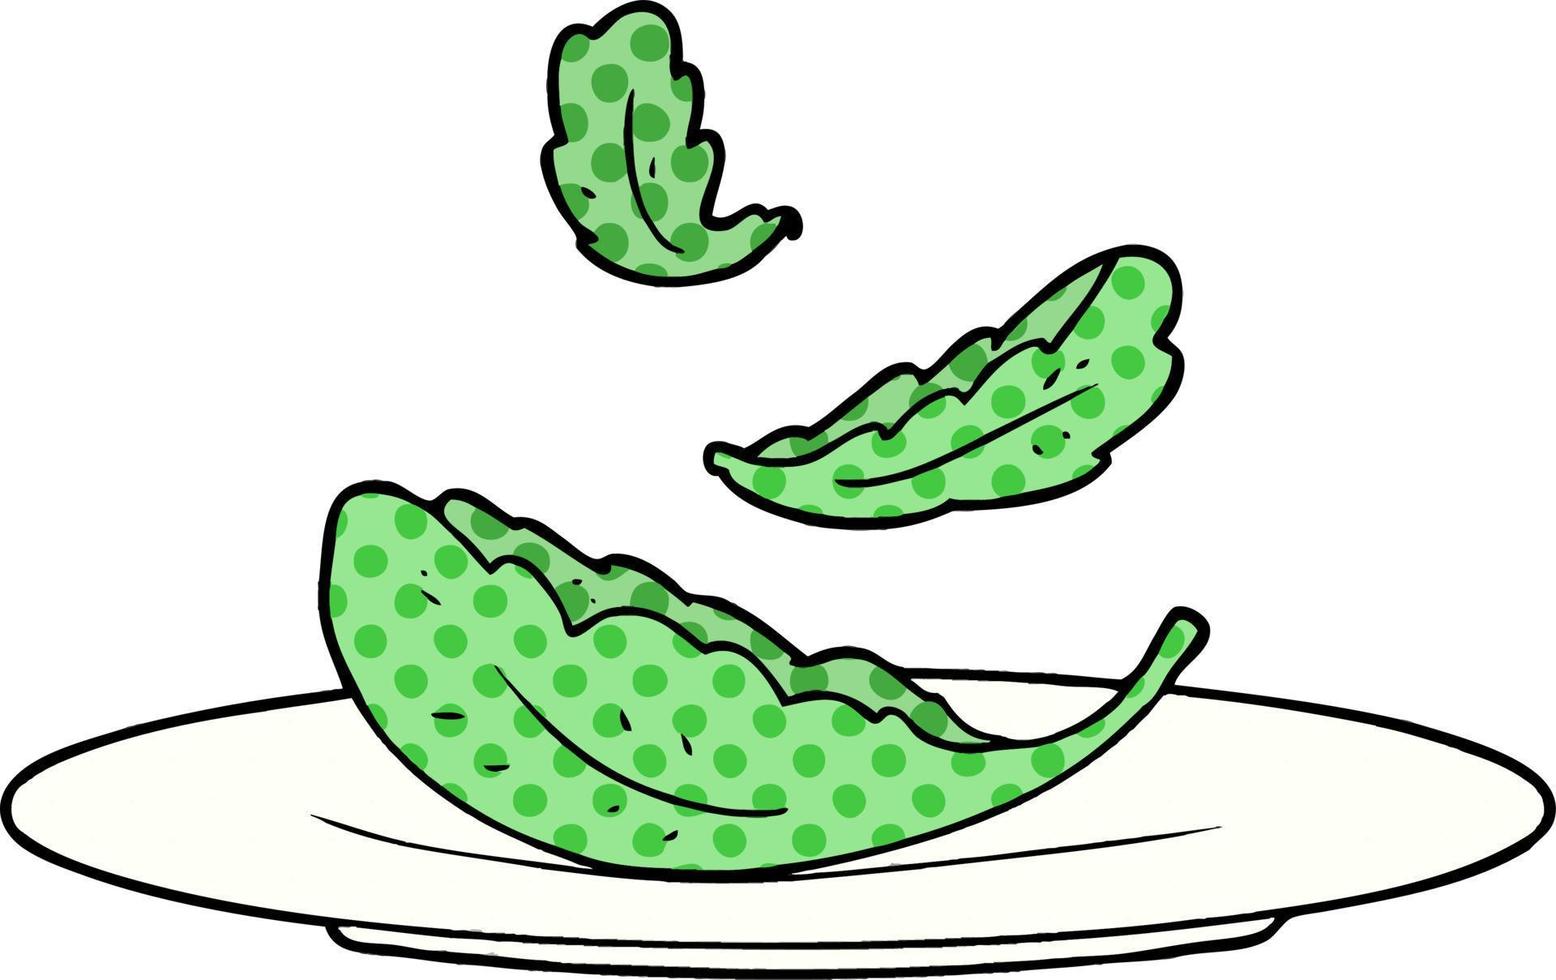 feuilles de salade de dessin animé vecteur